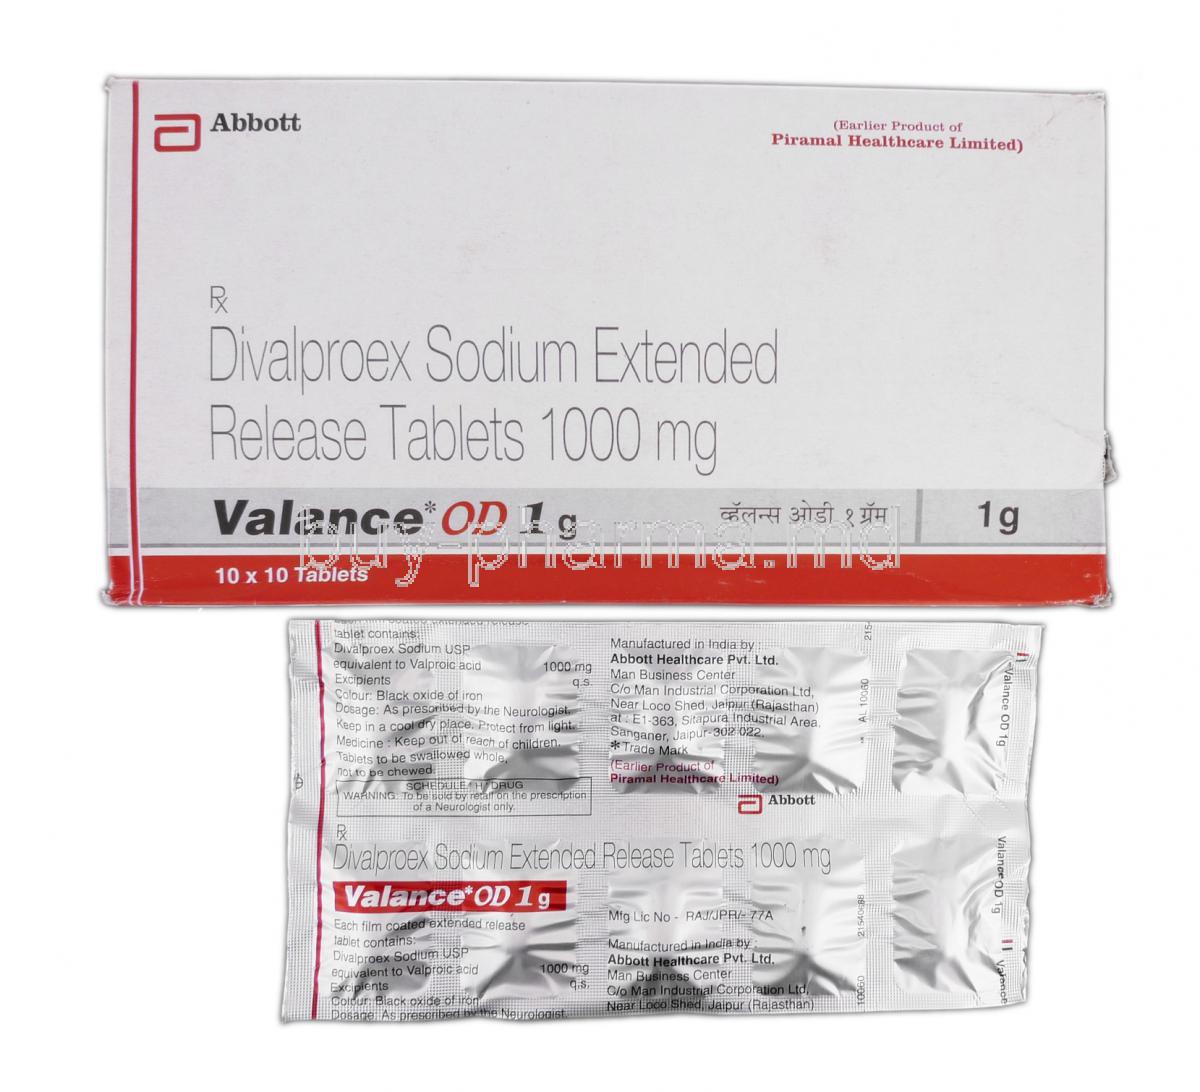 Valance OD 1g, Geneiric Depakote, Divalproex Sodium ER, 1000 mg, Box and Strip